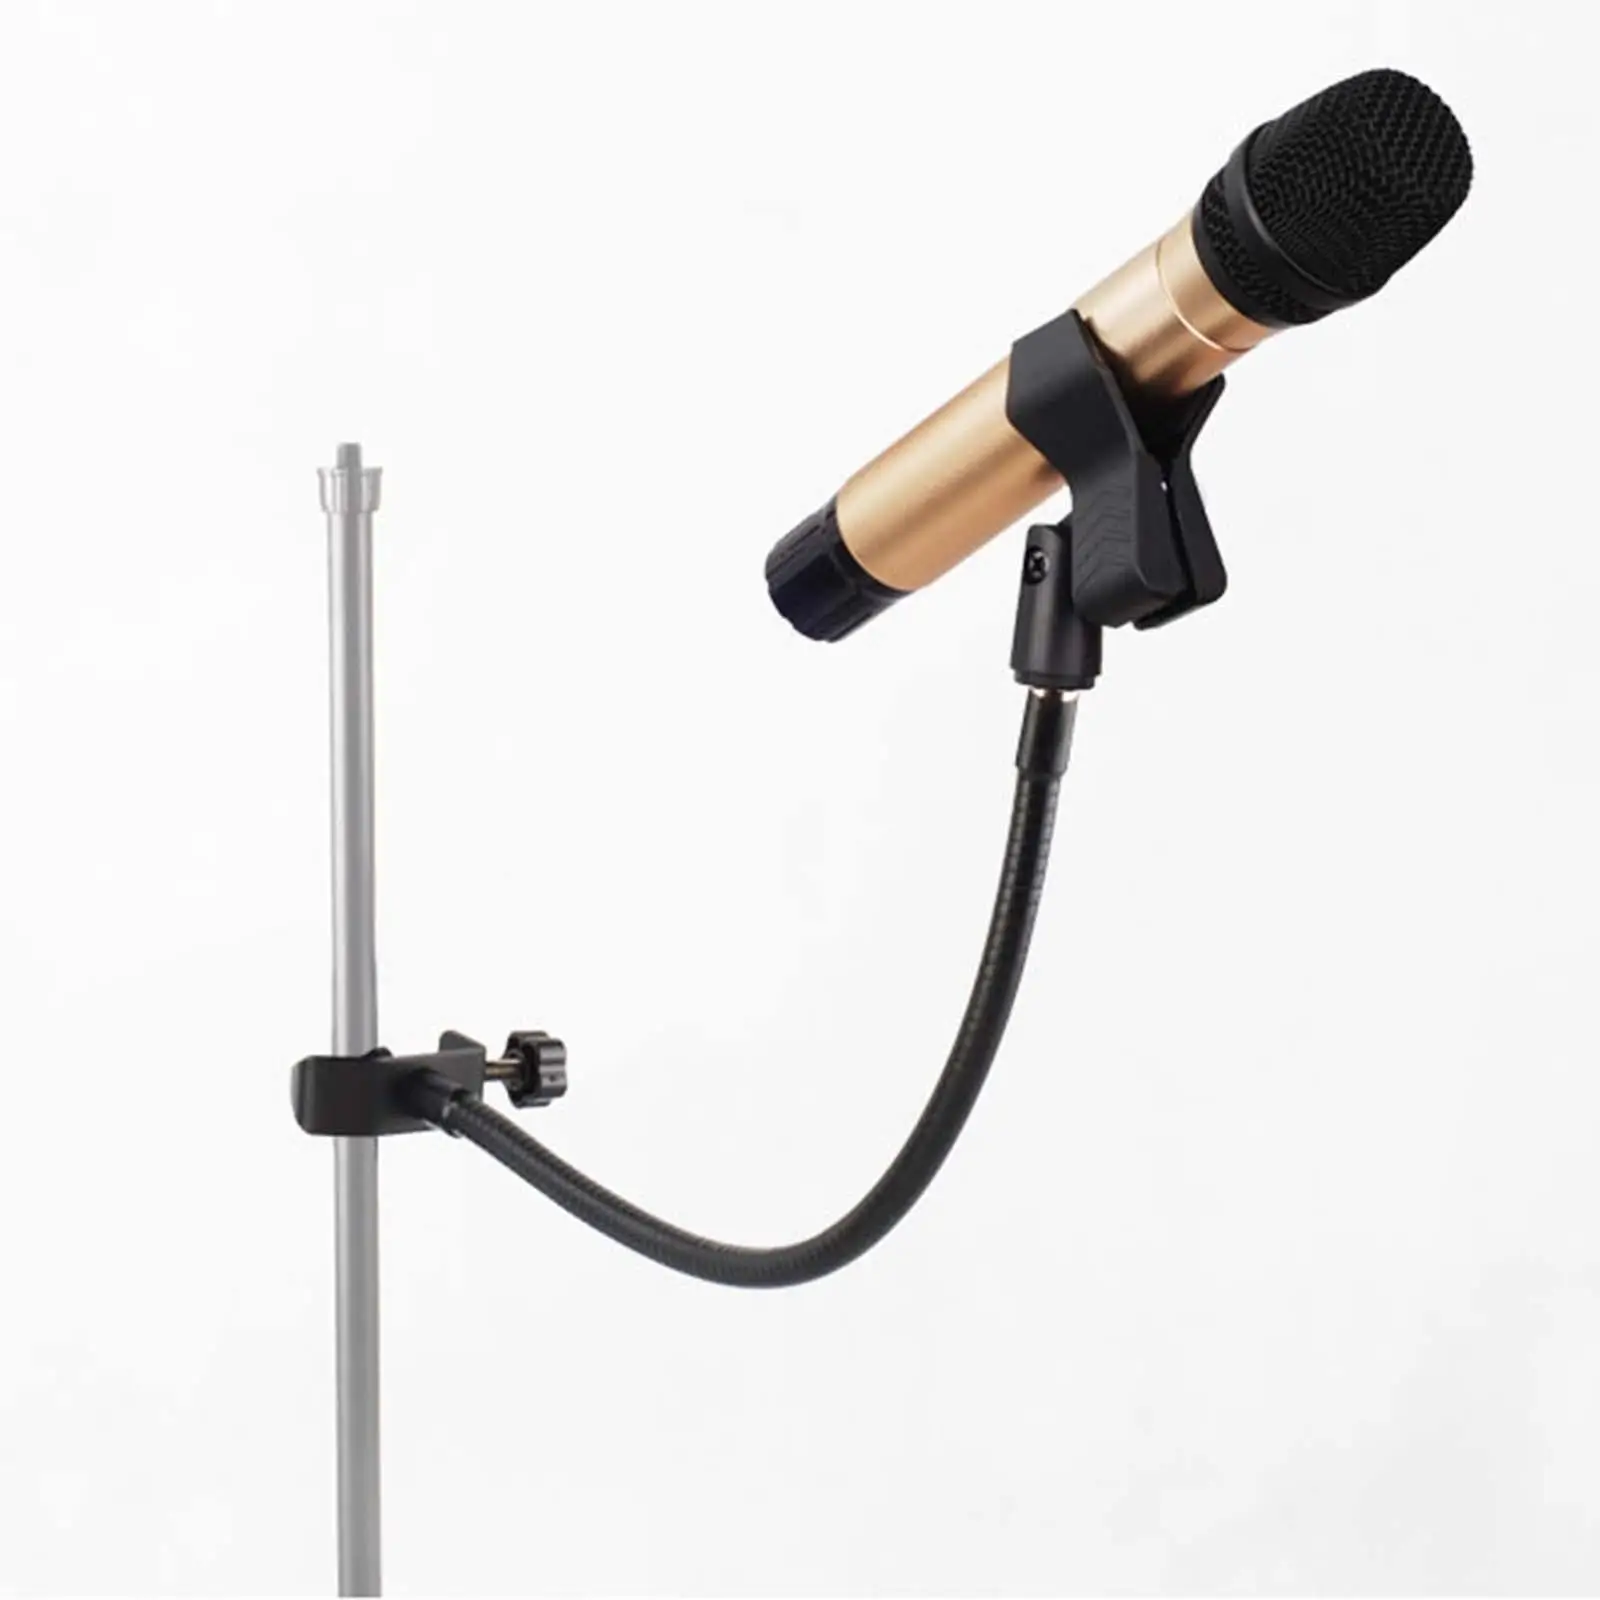 https://ae01.alicdn.com/kf/S1e42509d03214380bdc87a268ef02130P/Clips-de-tube-flexible-pour-microphone-en-m-tal-pince-de-bureau-RapDuty-support-de-bras.jpg